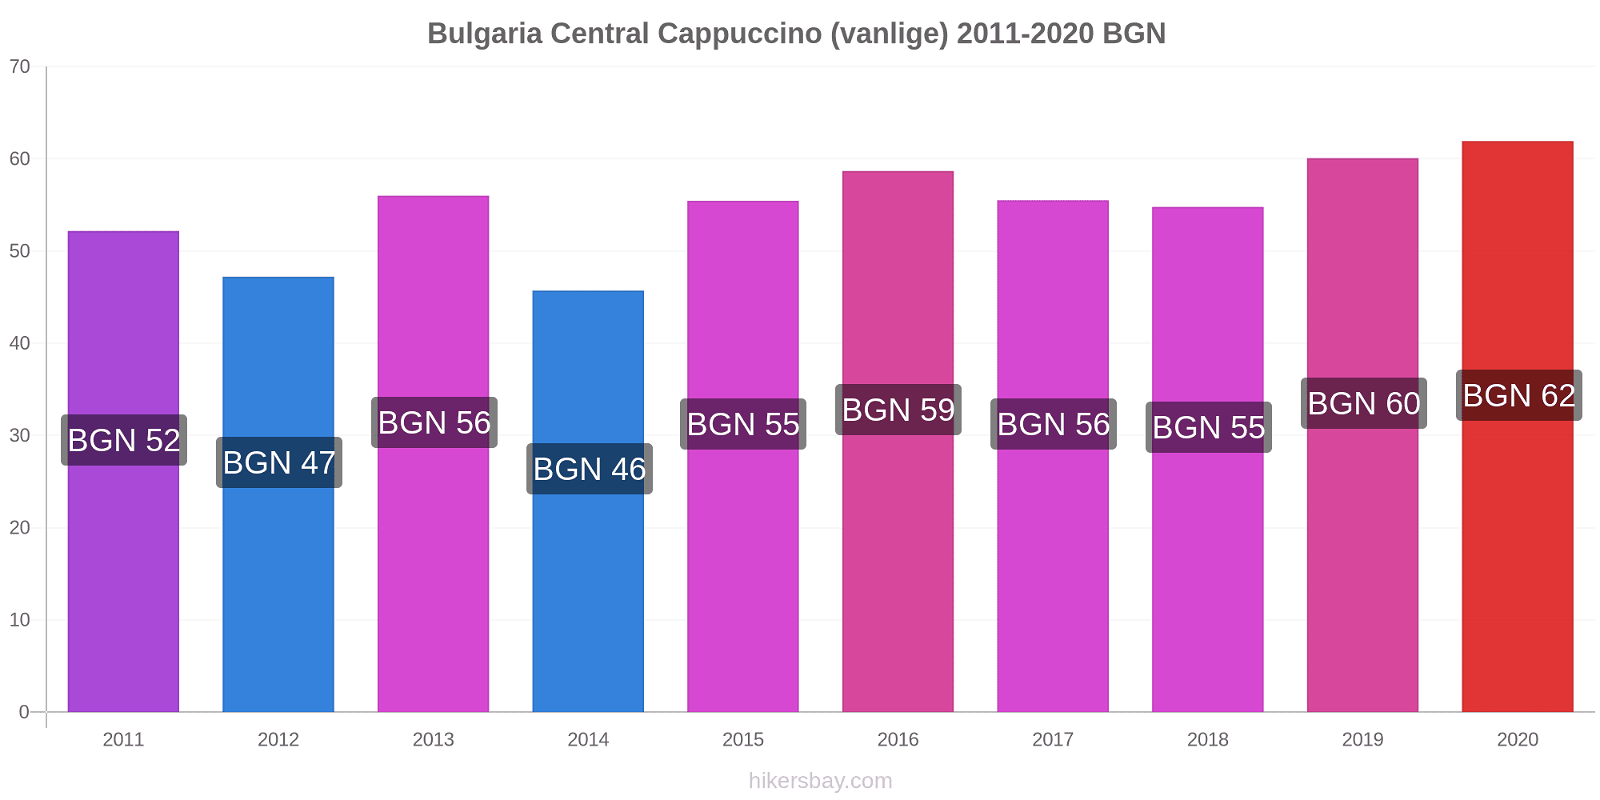 Bulgaria Central prisendringer Cappuccino (vanlige) hikersbay.com